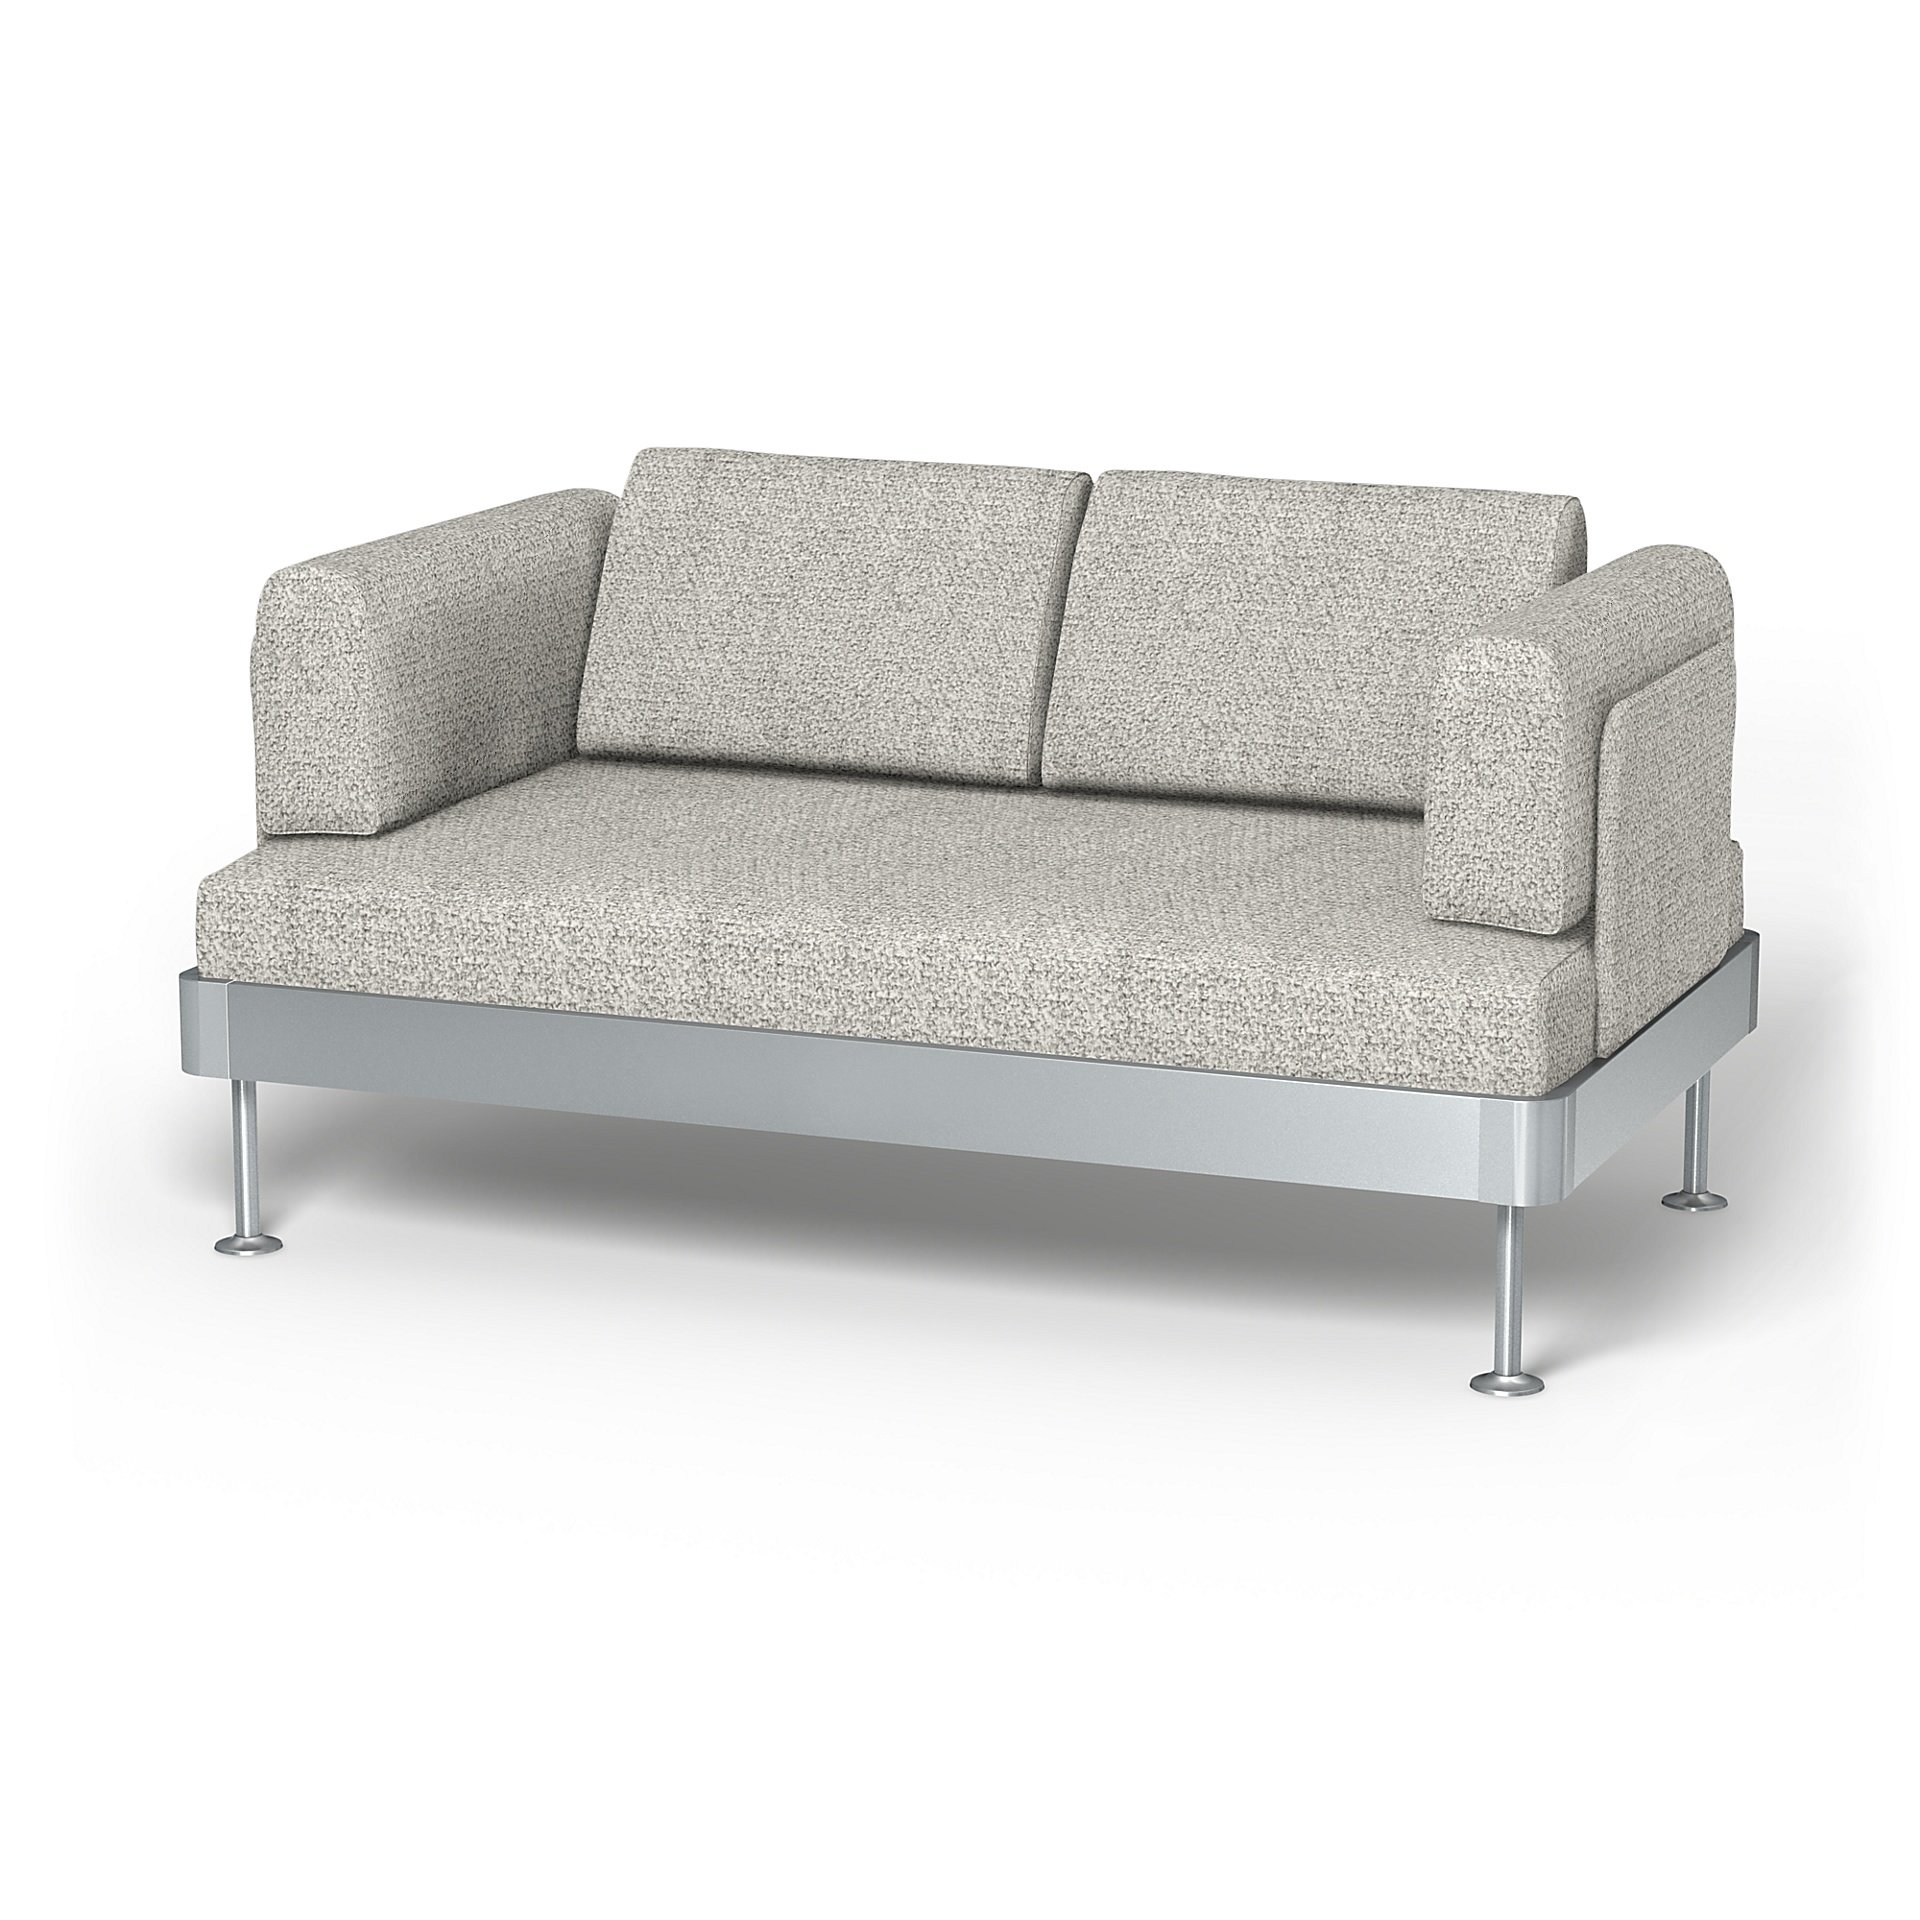 IKEA - Delaktig 2 Seater Sofa Cover, Driftwood, Boucle & Texture - Bemz